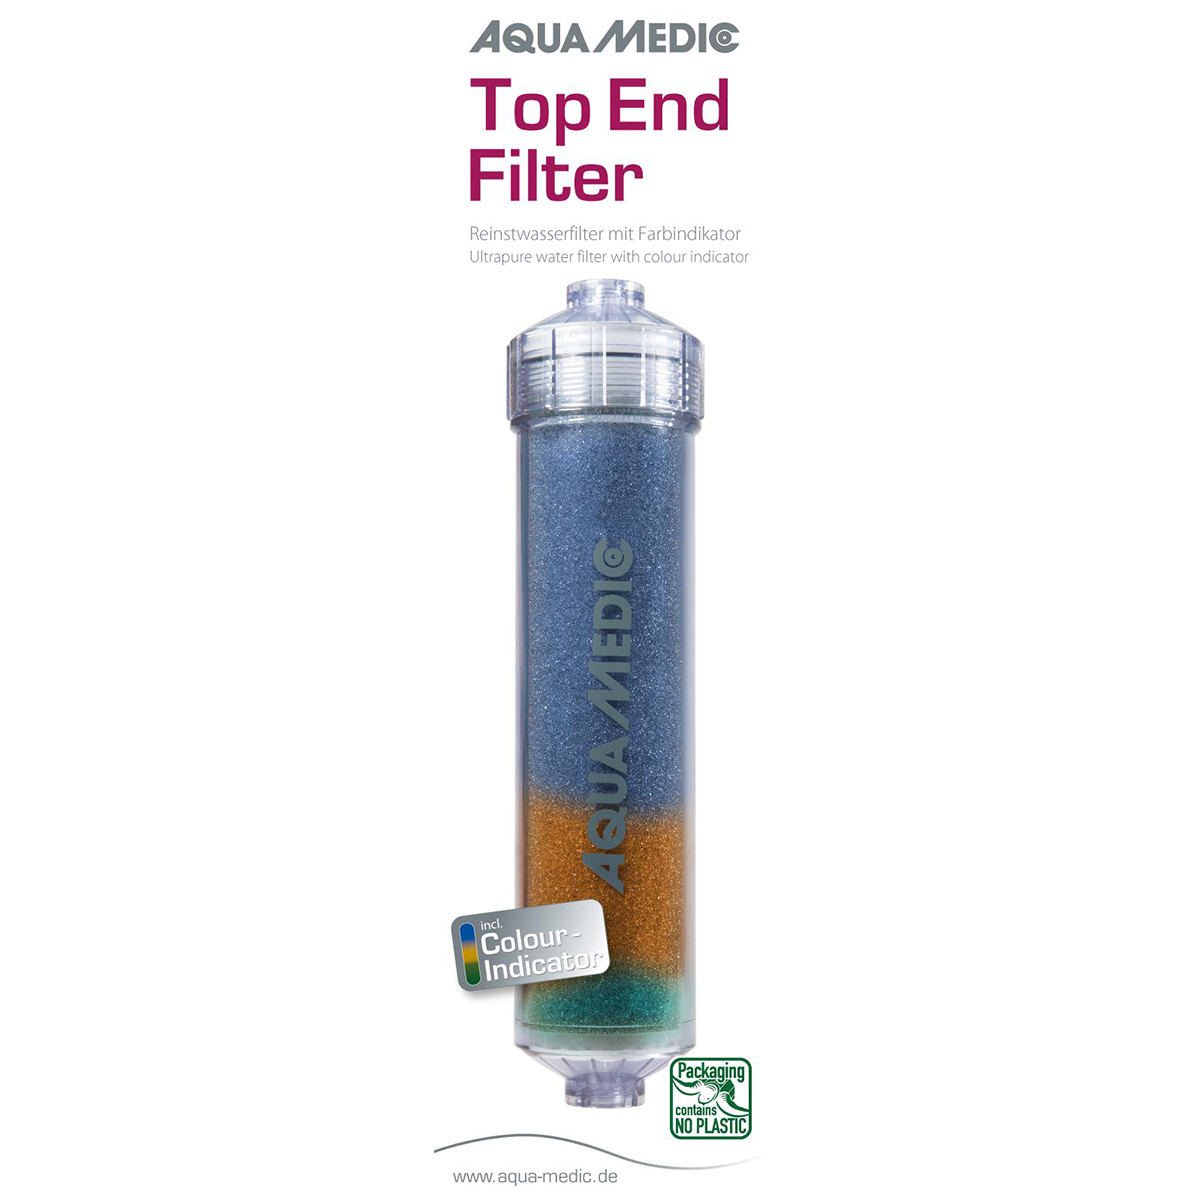 Aqua Medic filtr pro velmi čistou vodu Top End filtr + barevný indikátor